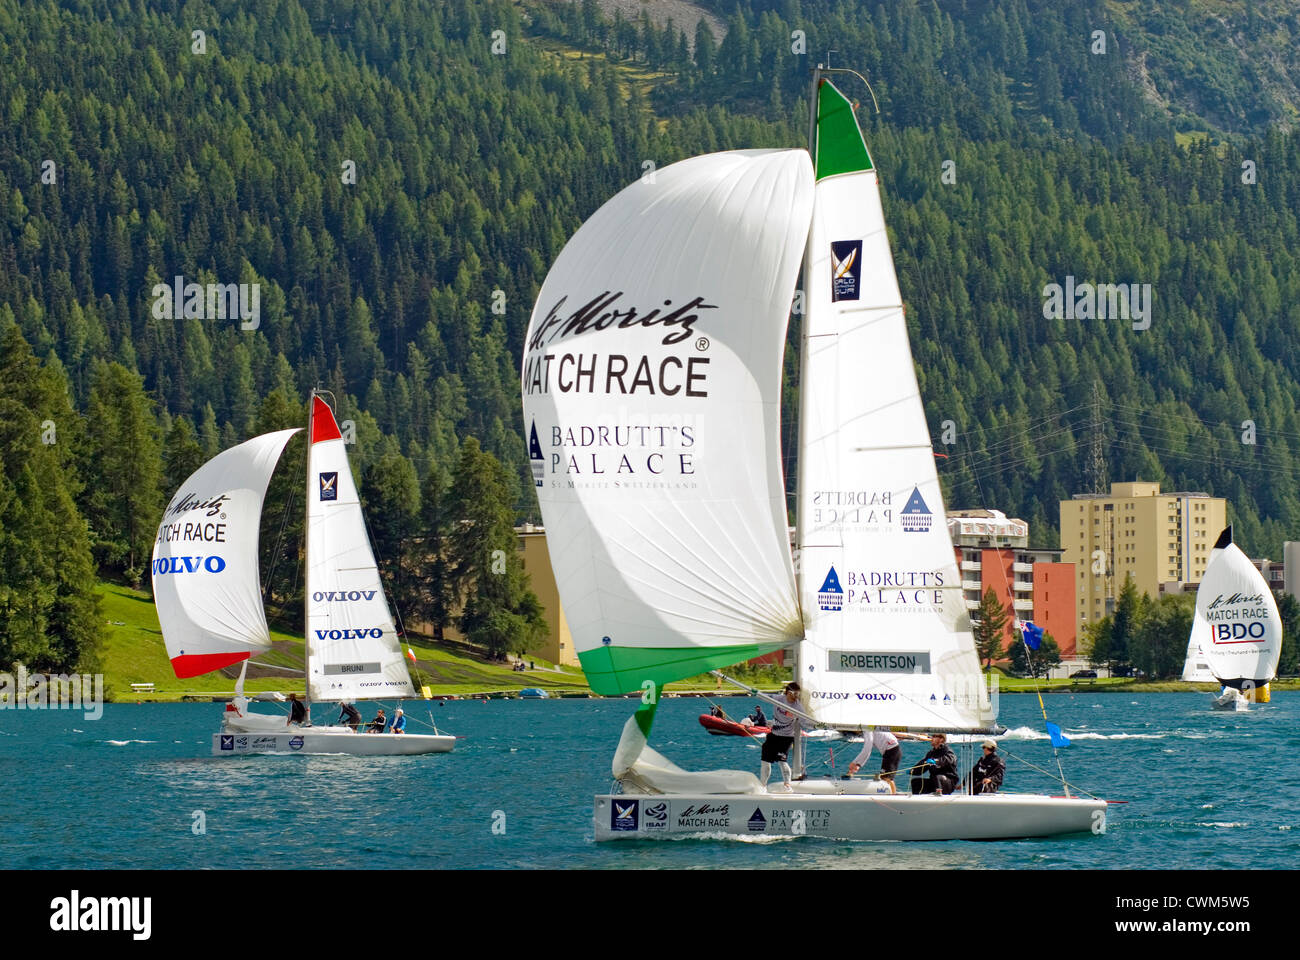 Barche a vela da regata durante la gara di Match Race, St Moritz, Svizzera  Foto stock - Alamy